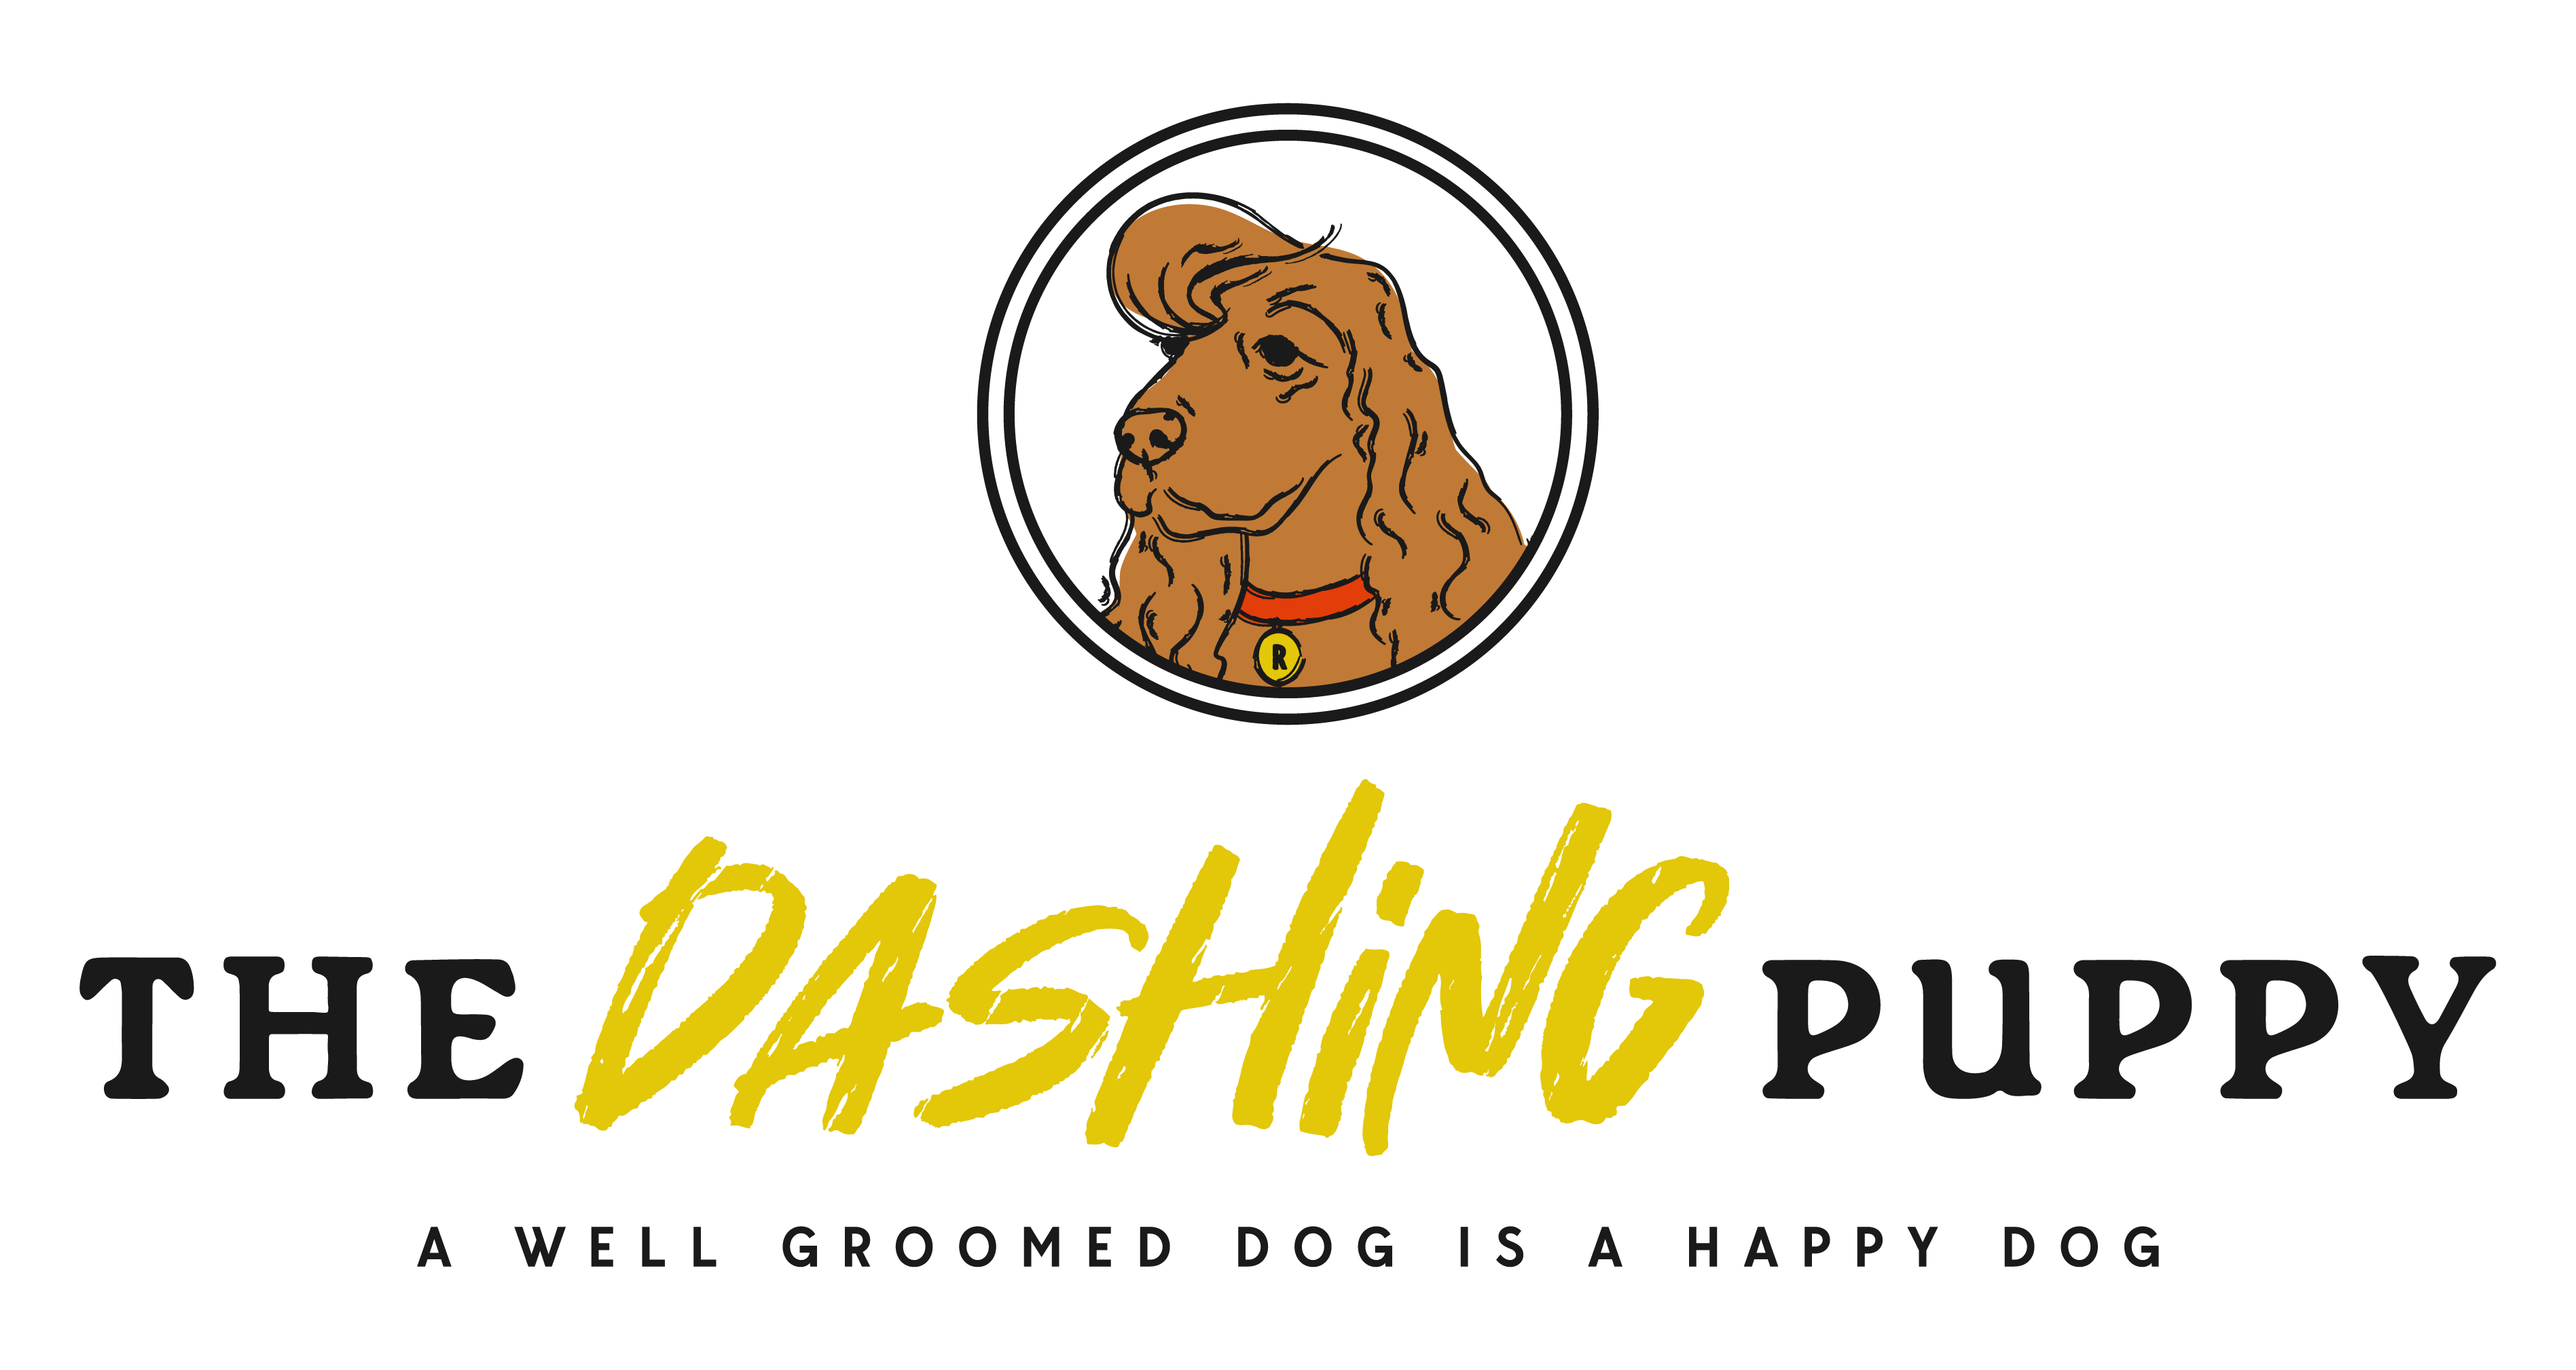 The Dashing Puppy